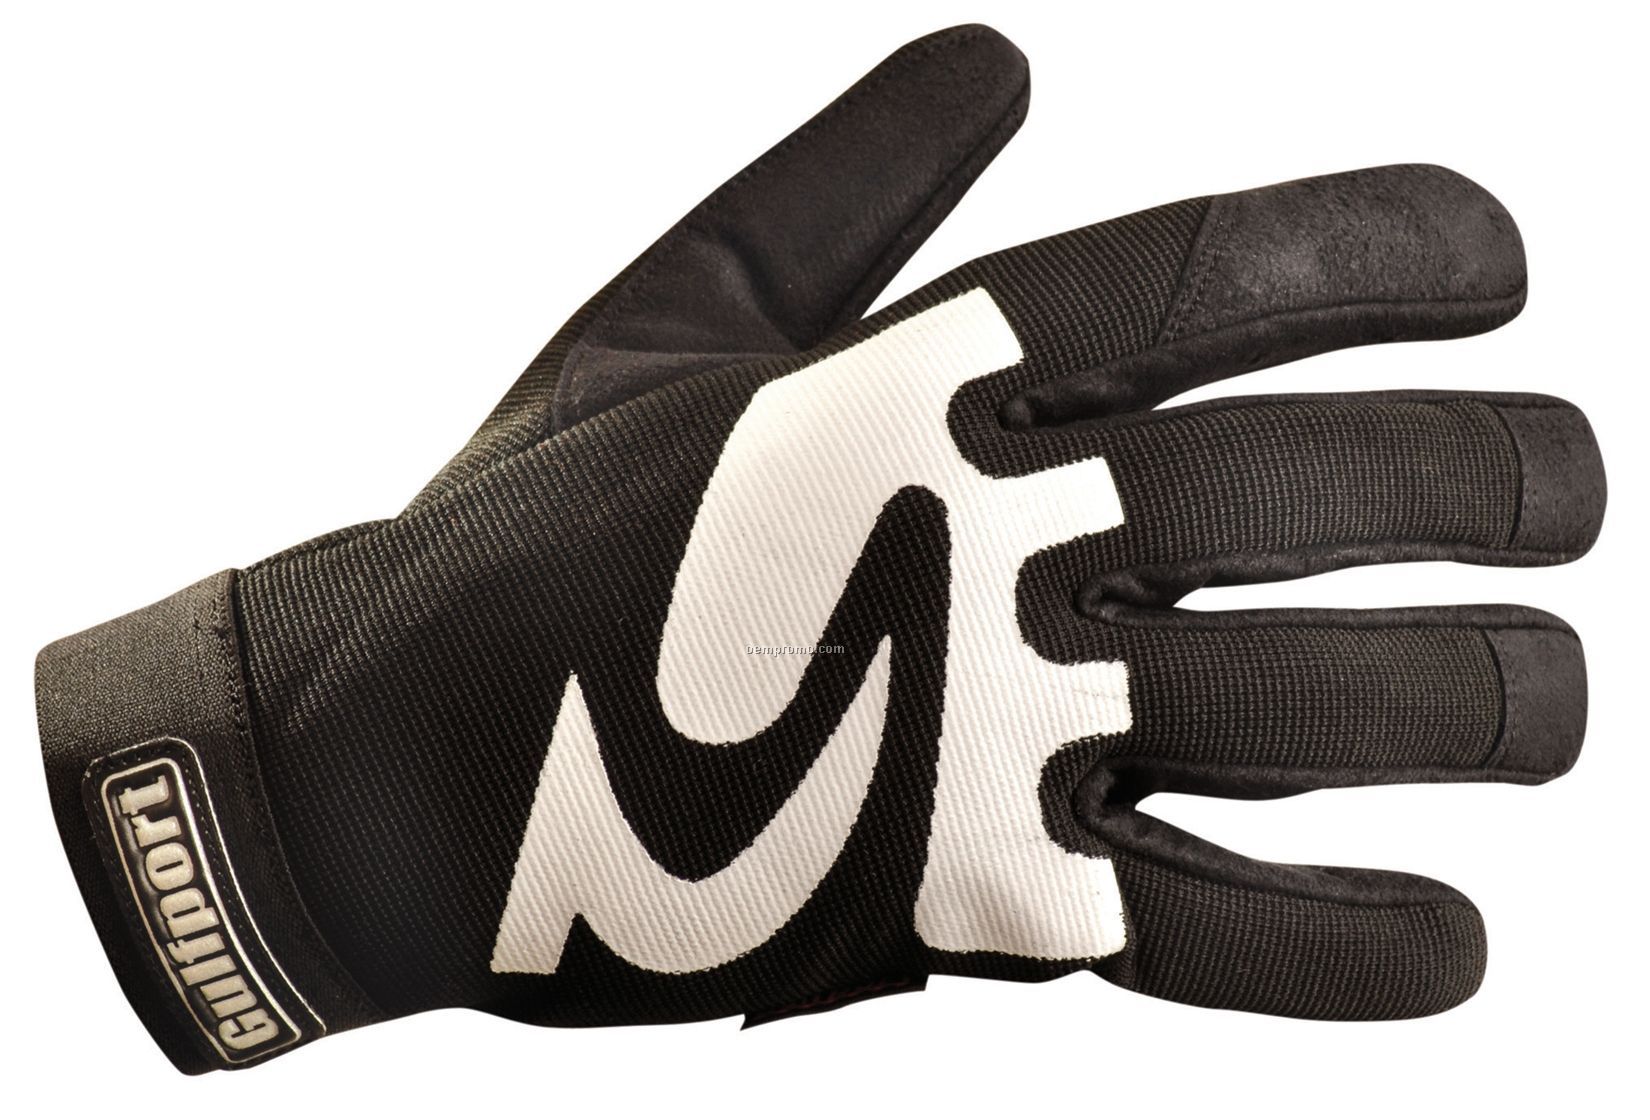 Value Gulfport Mechanics Glove